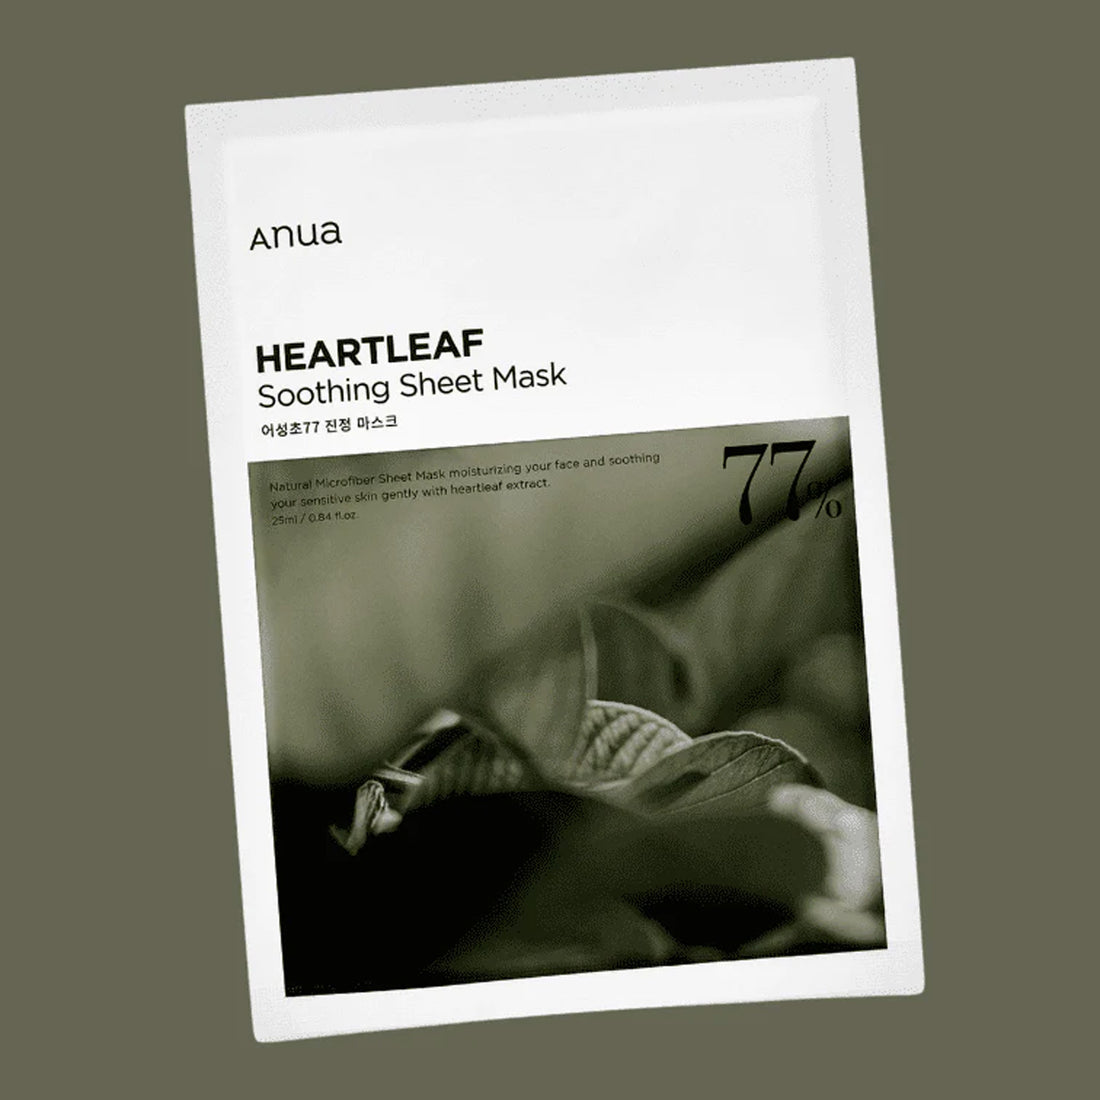 Anua Heartleaf 77% Soothing Sheet Mask 1pc